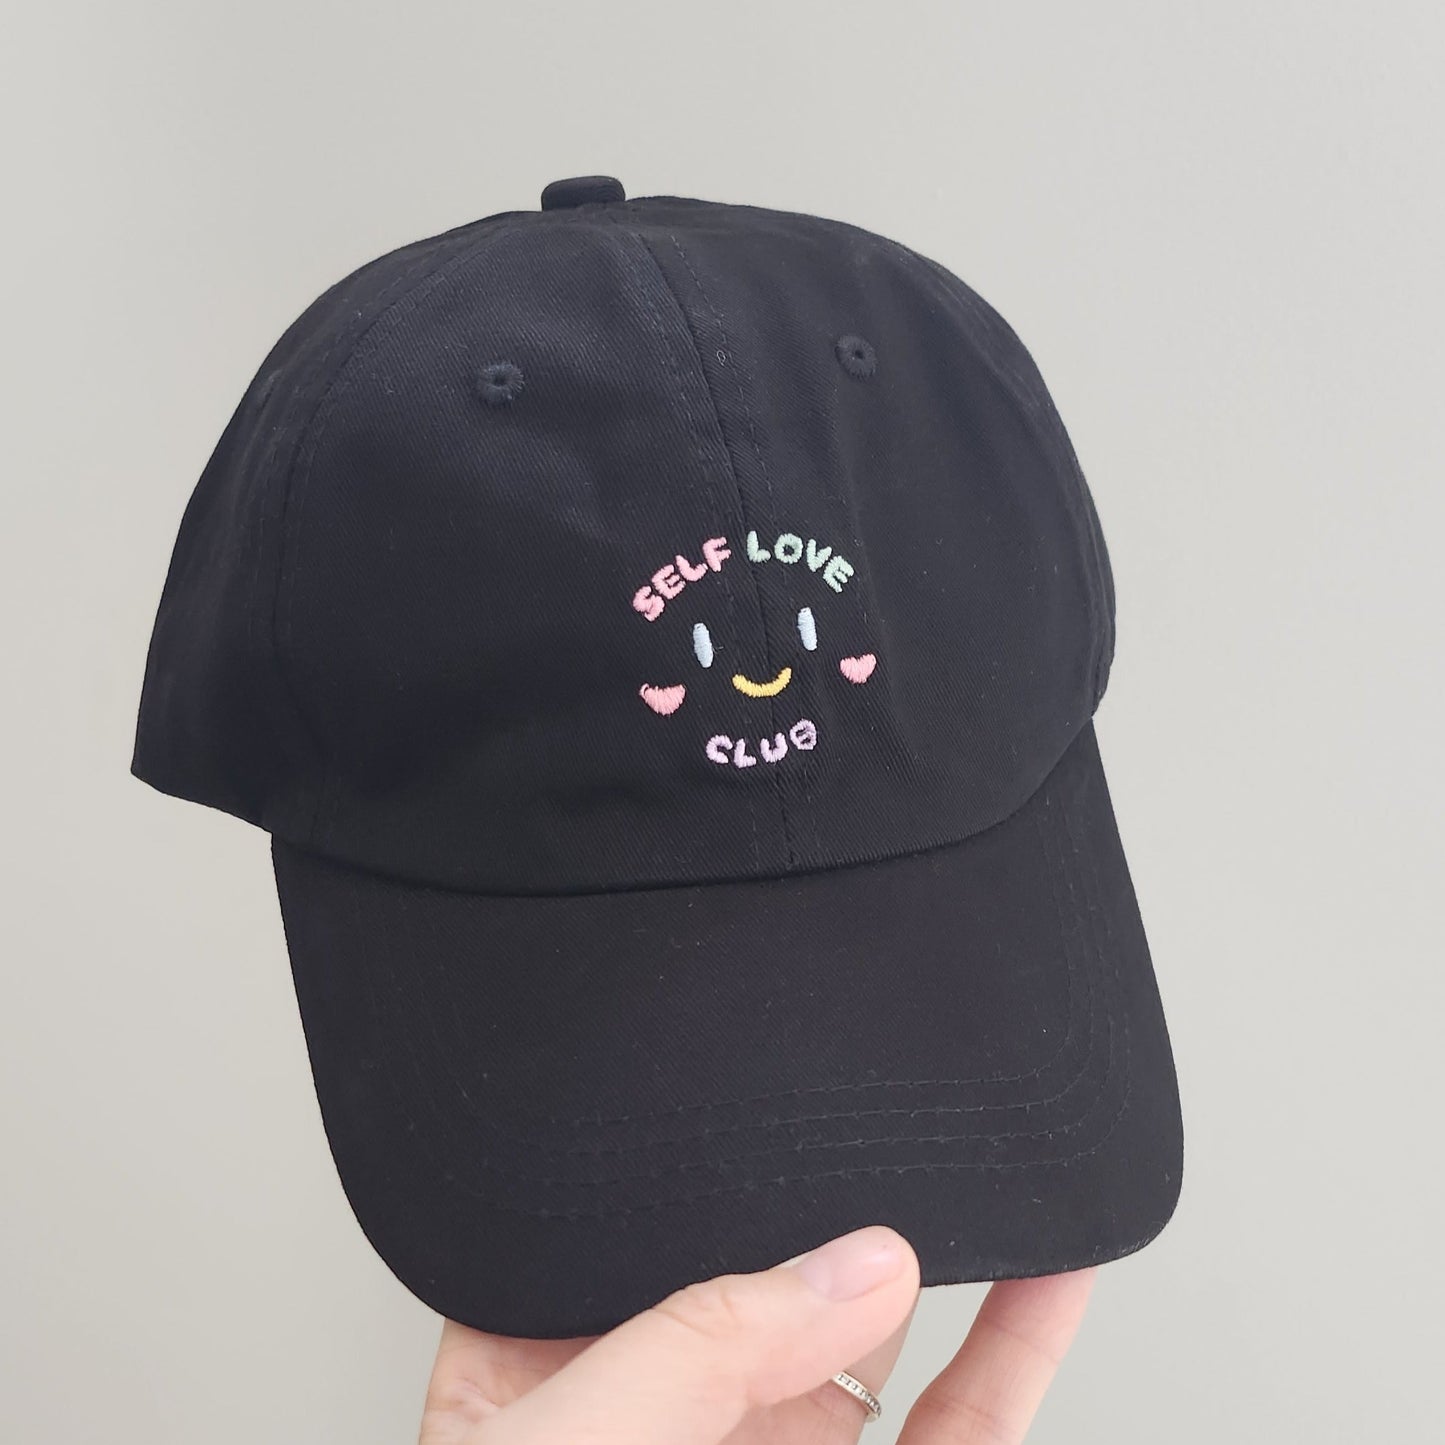 Self Love Club/Mental Heatlh Embroidery Hat